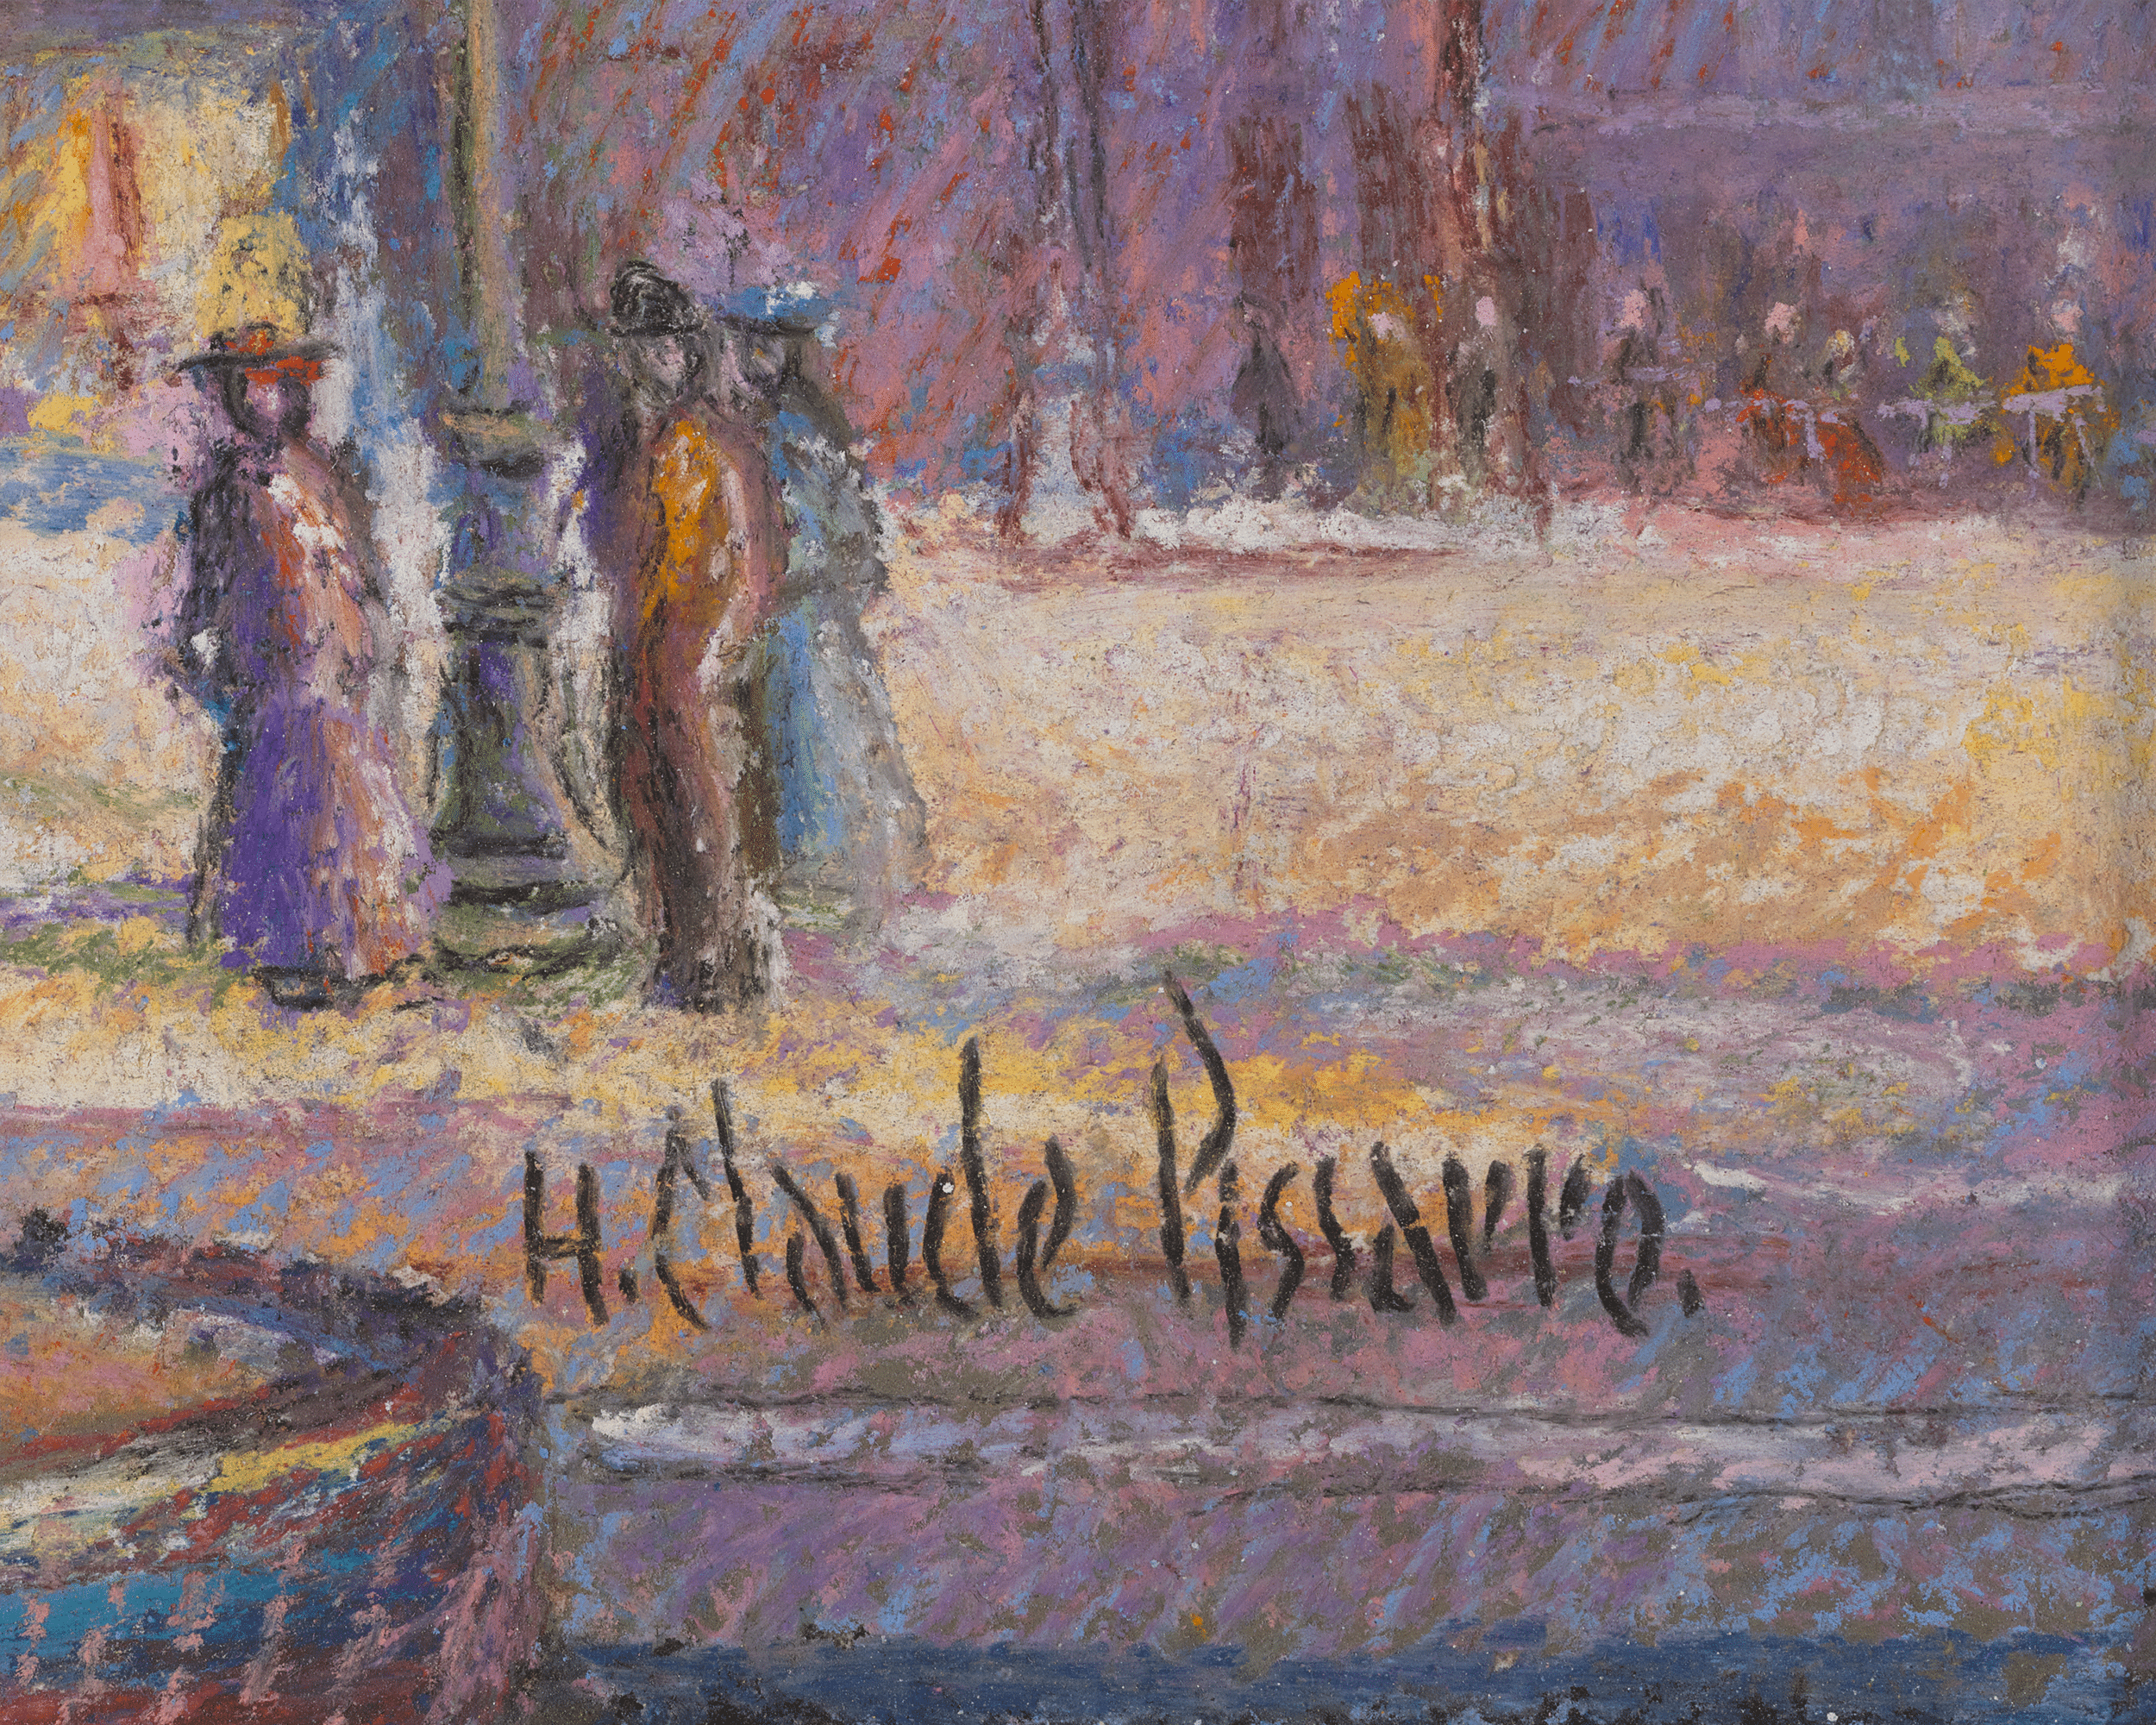 Marseille La Cannebière by H. Claude Pissarro